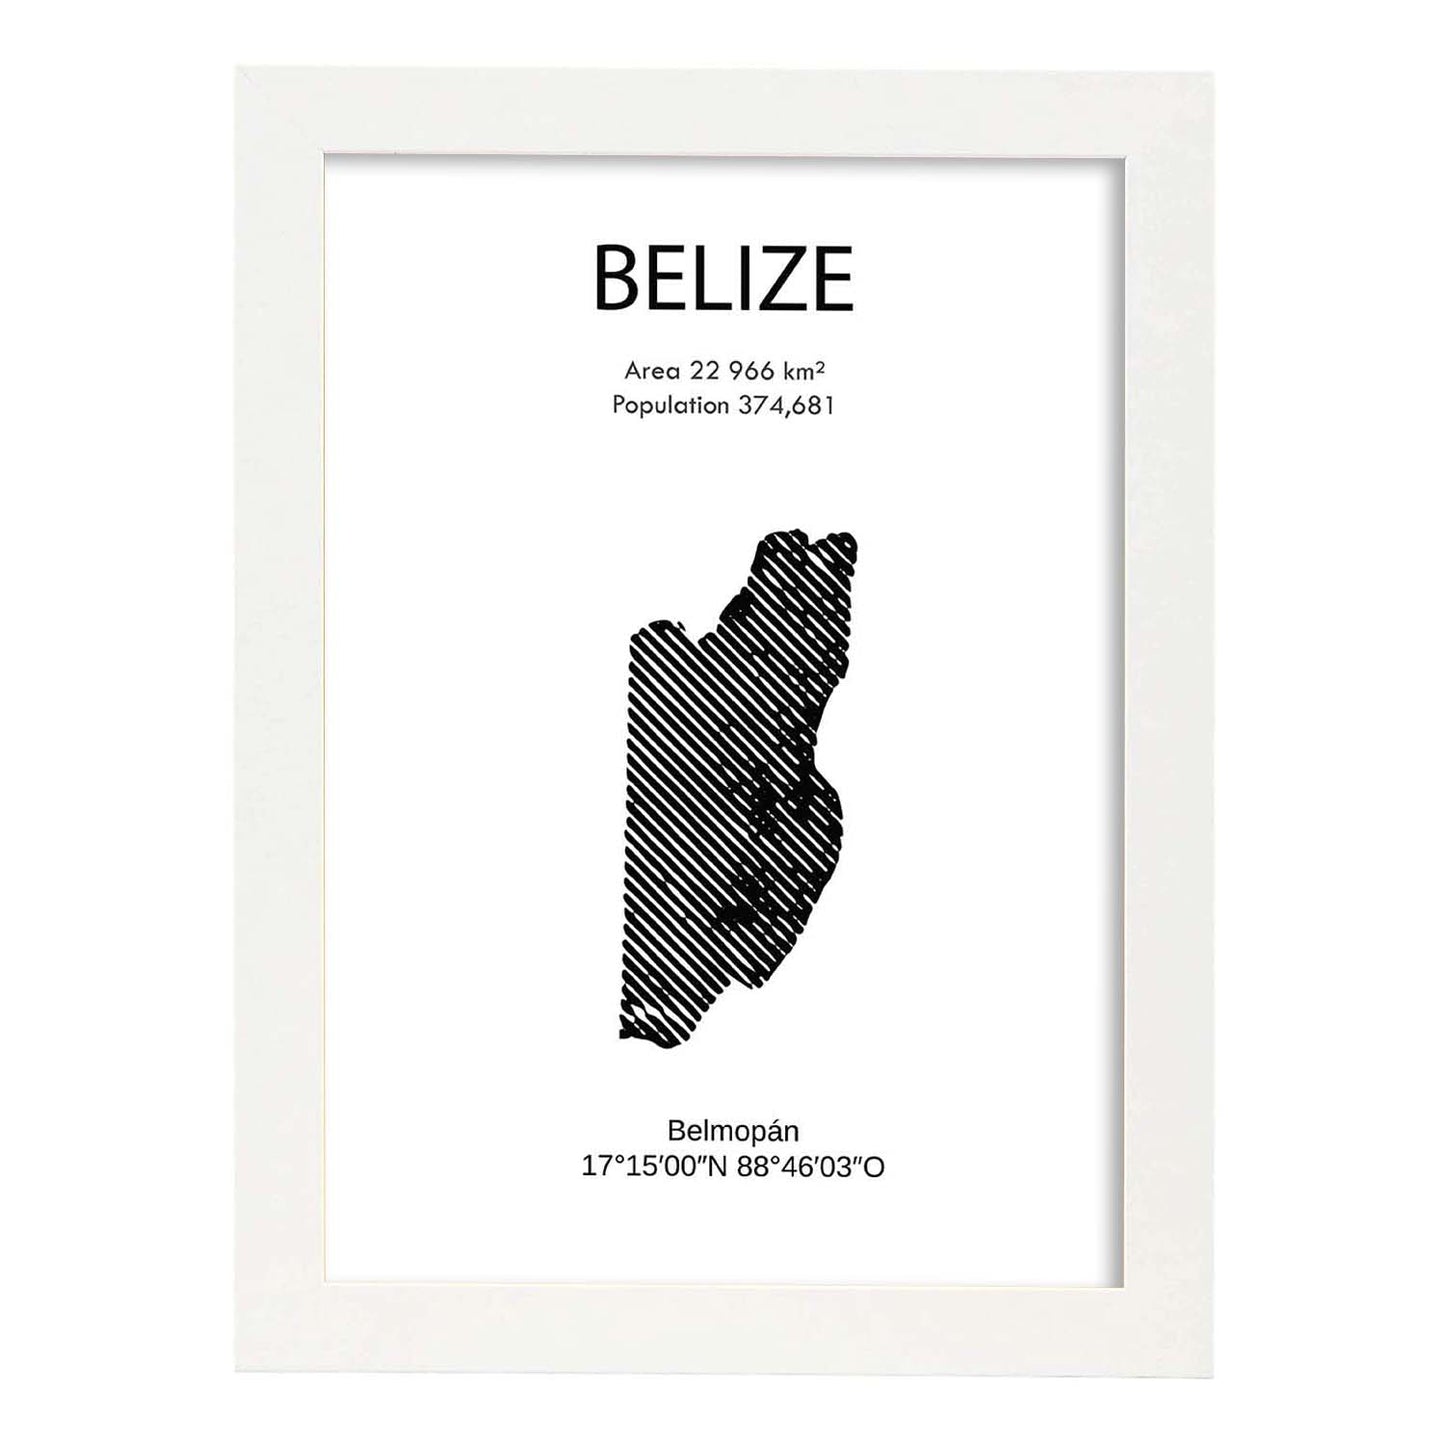 Poster de Belize. Láminas de paises y continentes del mundo.-Artwork-Nacnic-A3-Marco Blanco-Nacnic Estudio SL